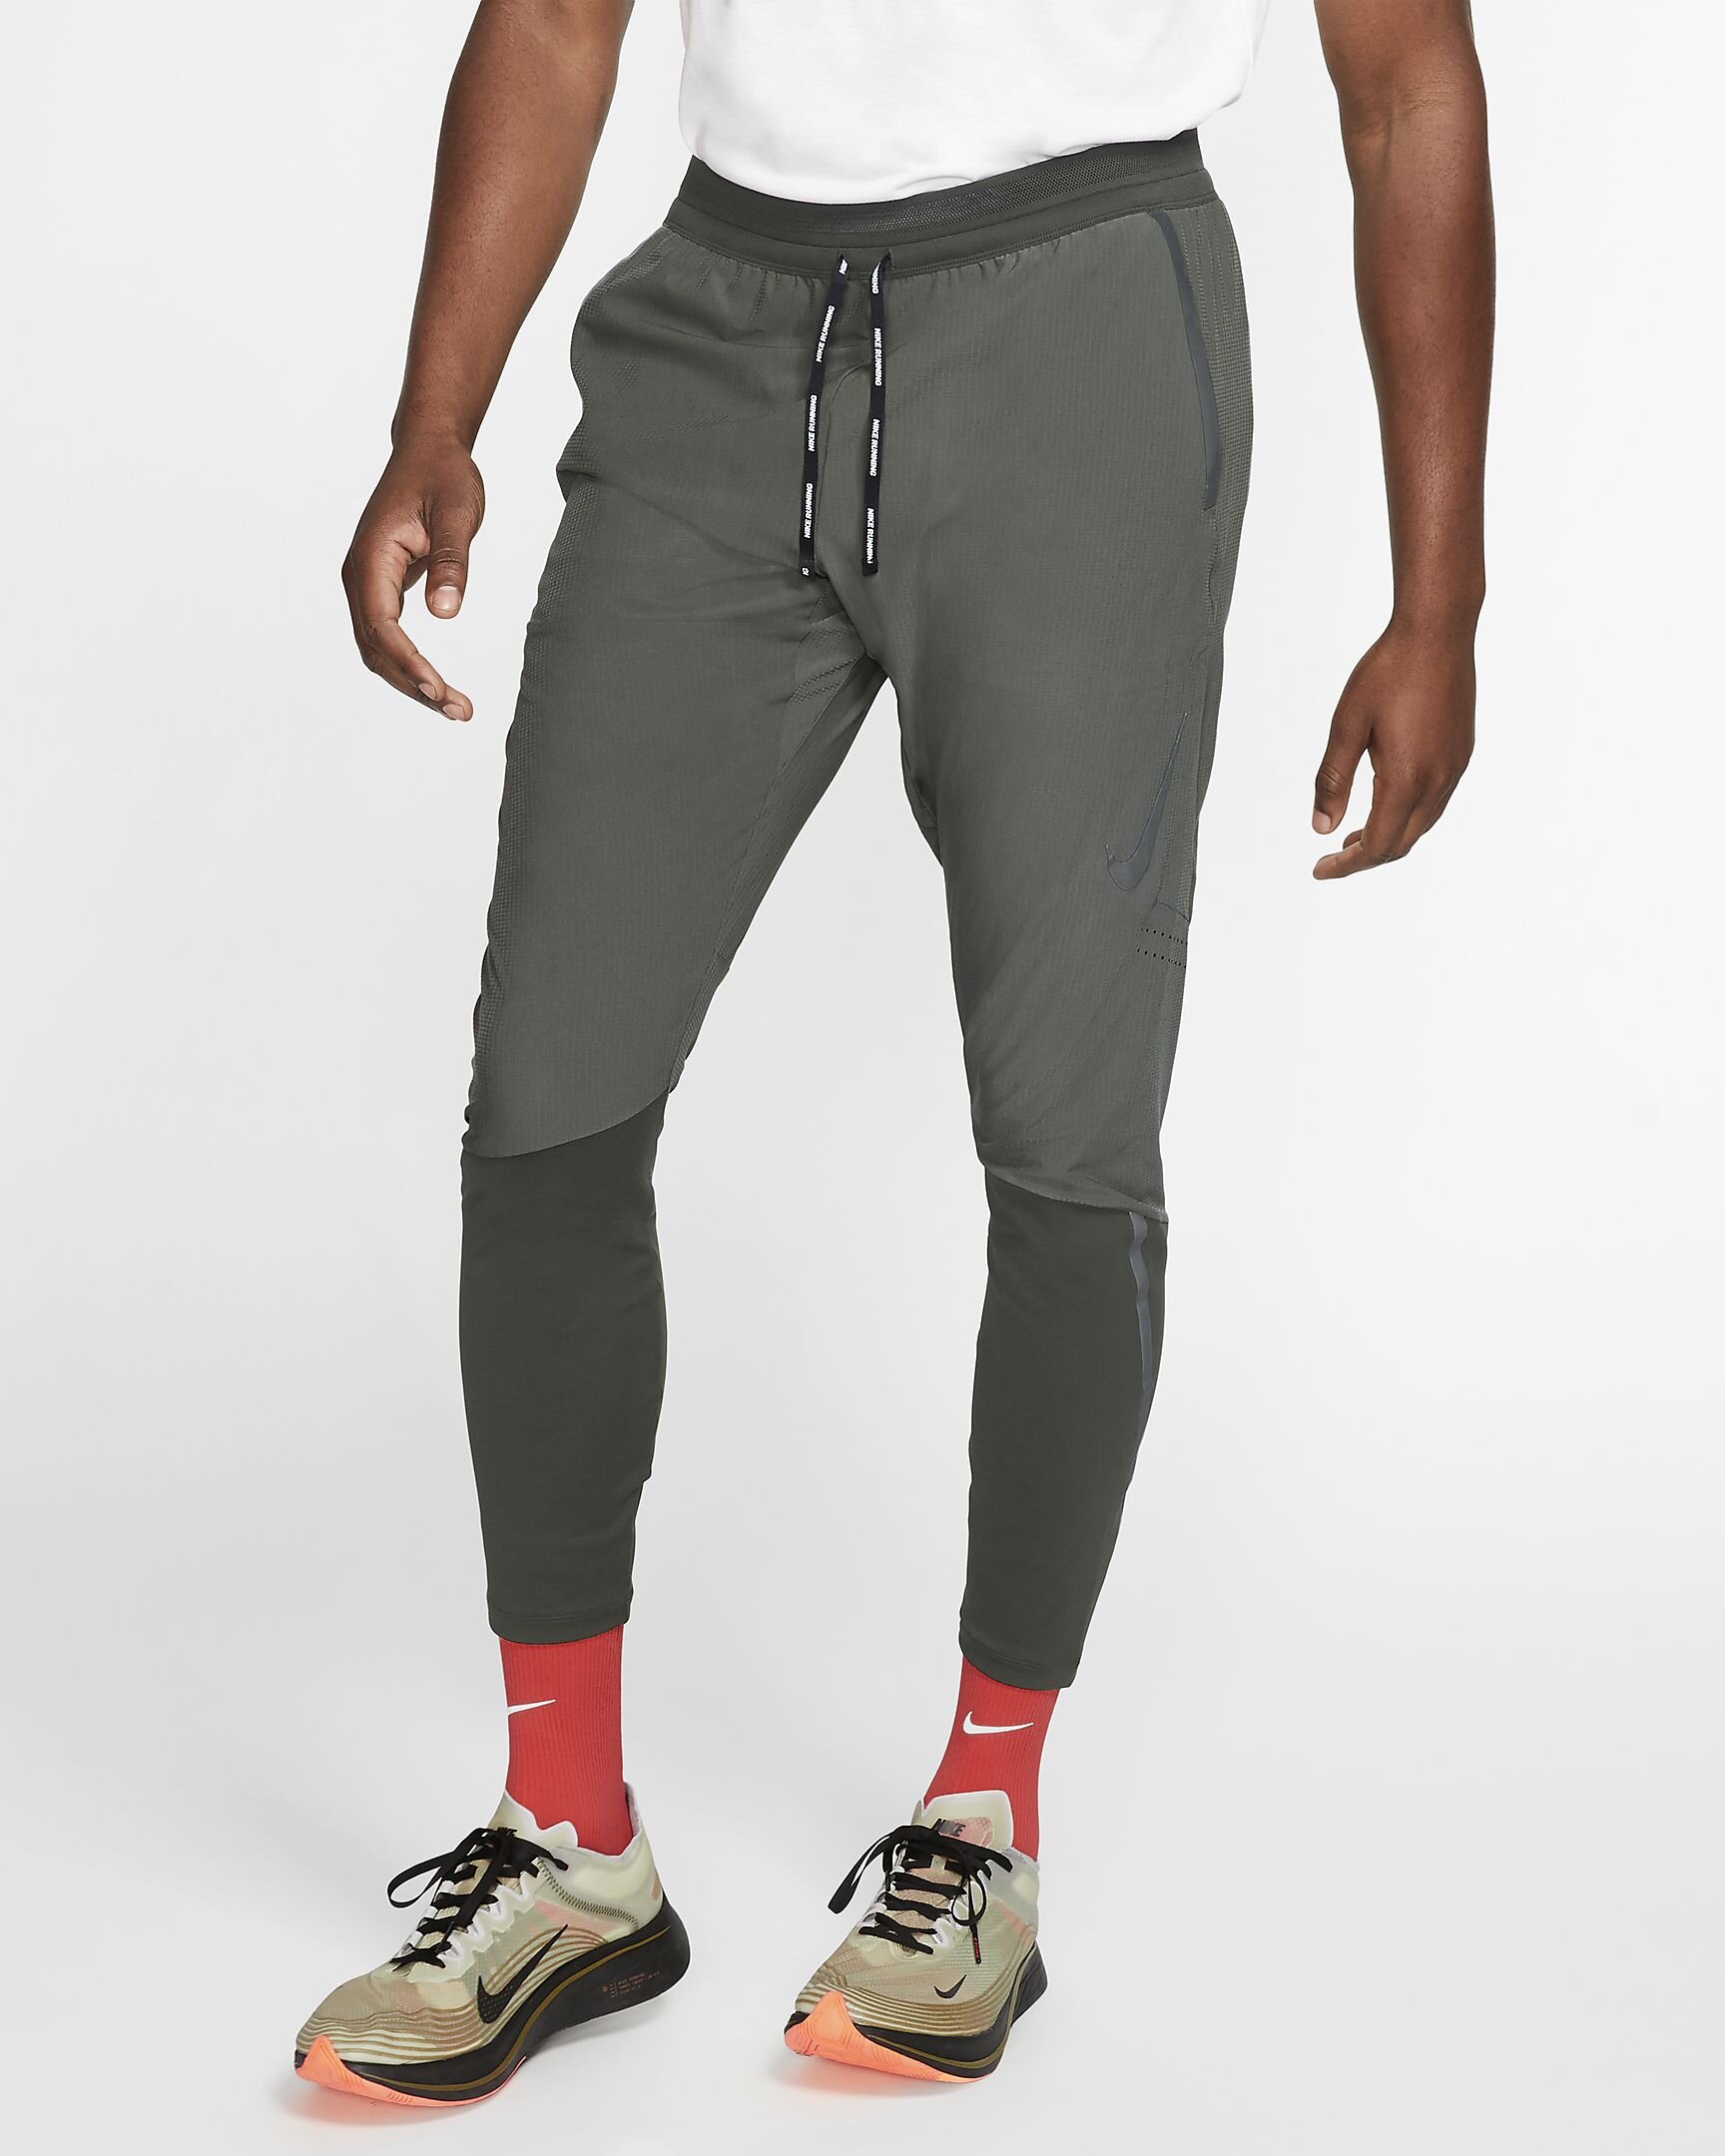 Nike Swift Running Pants